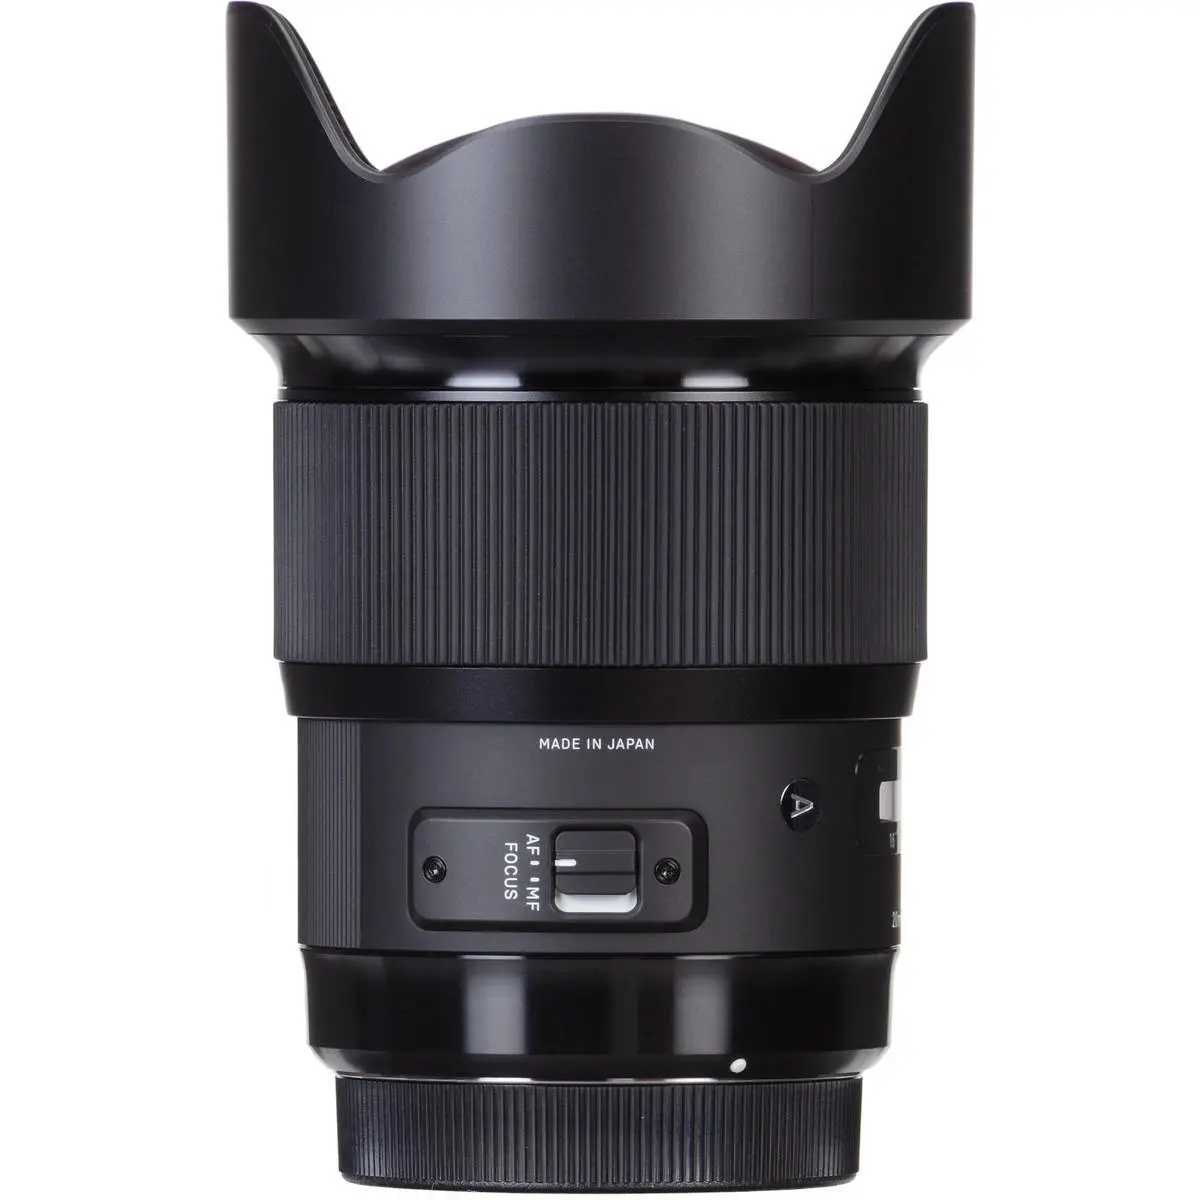 2. Sigma 20mm F1.4 DG HSM | A (Canon) Lens